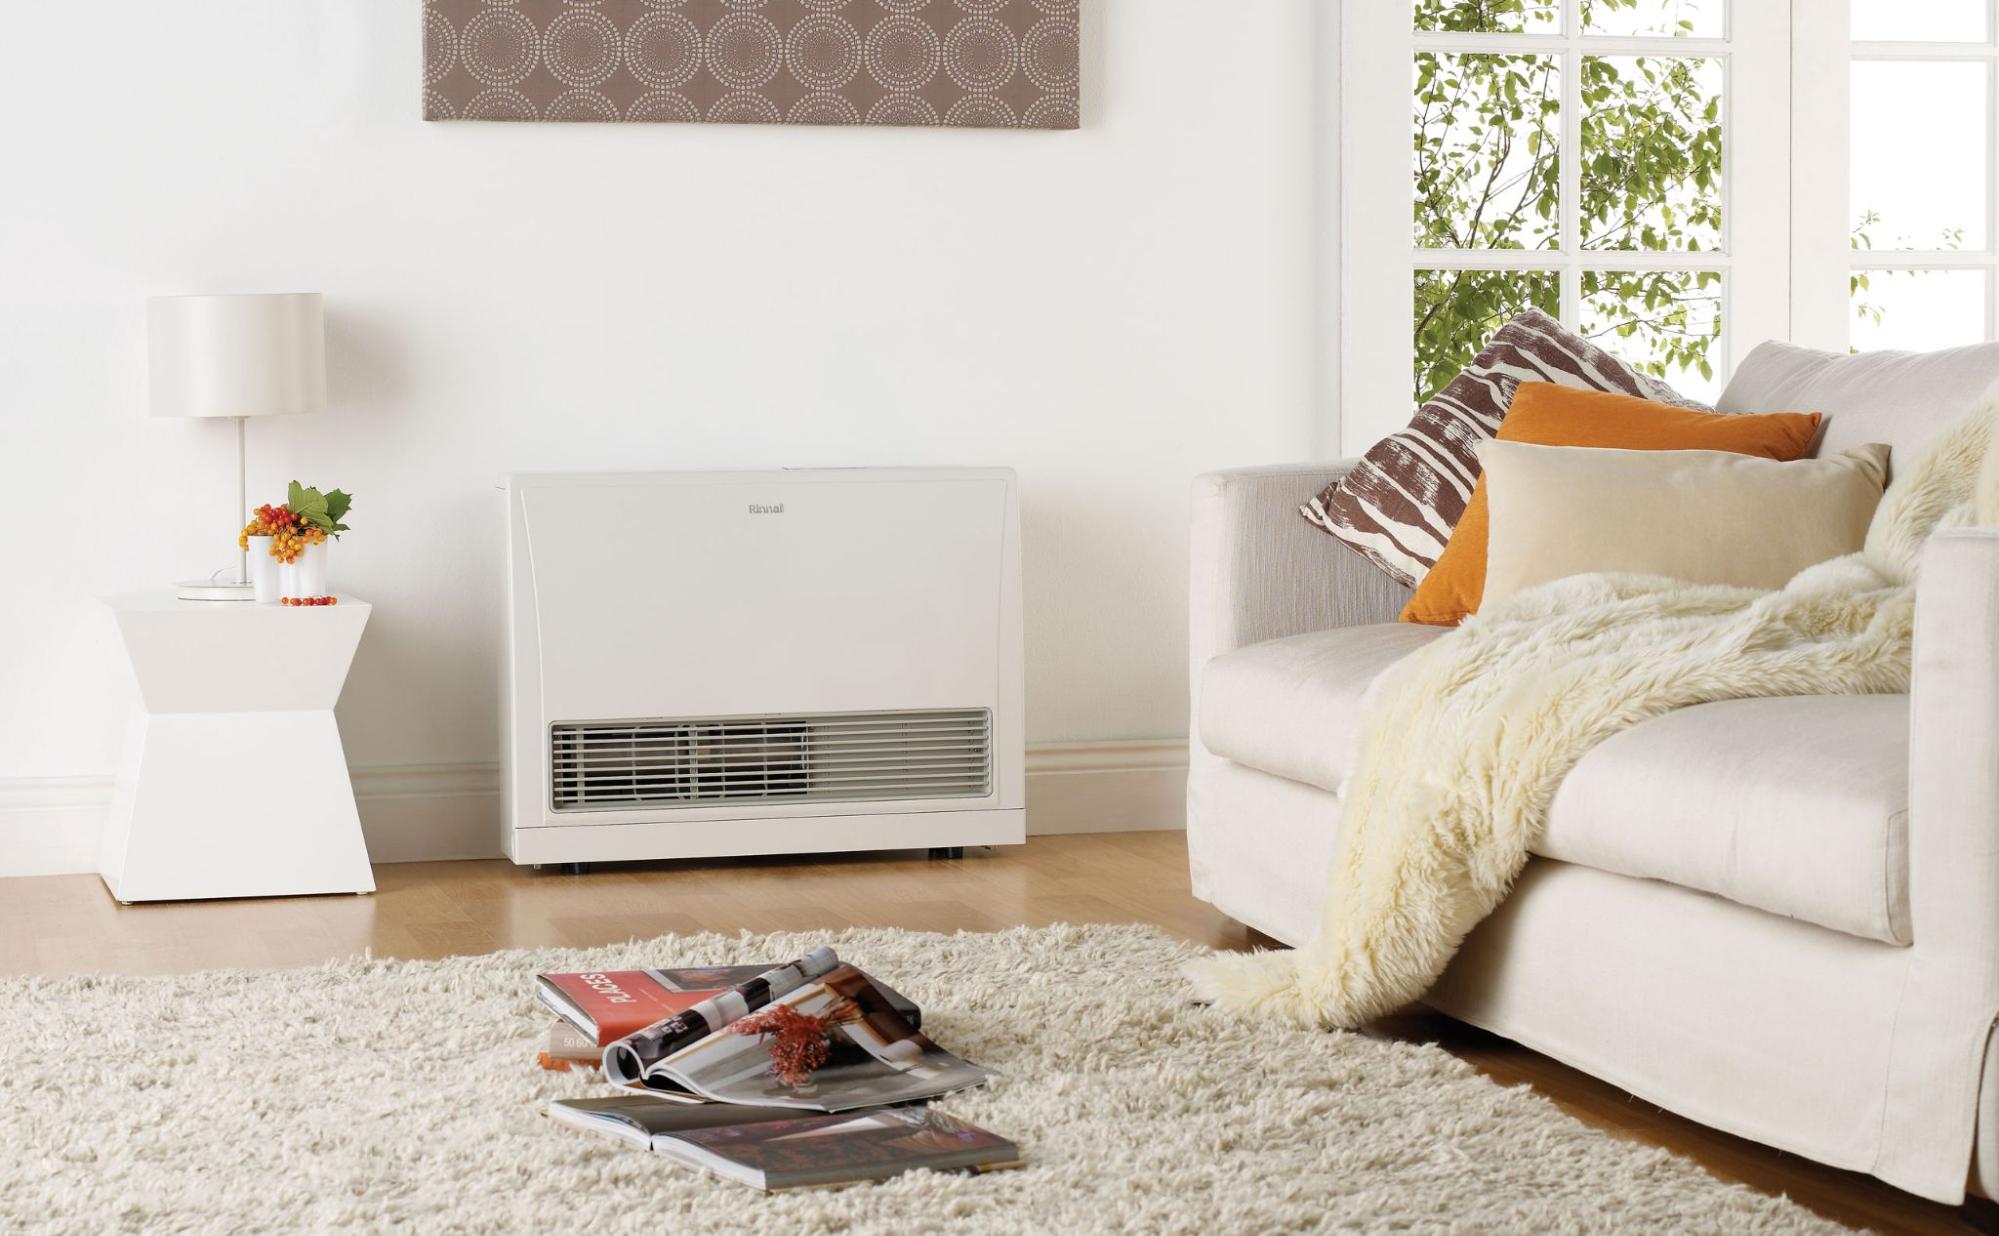 Rinnai Energy Saver Heater in room